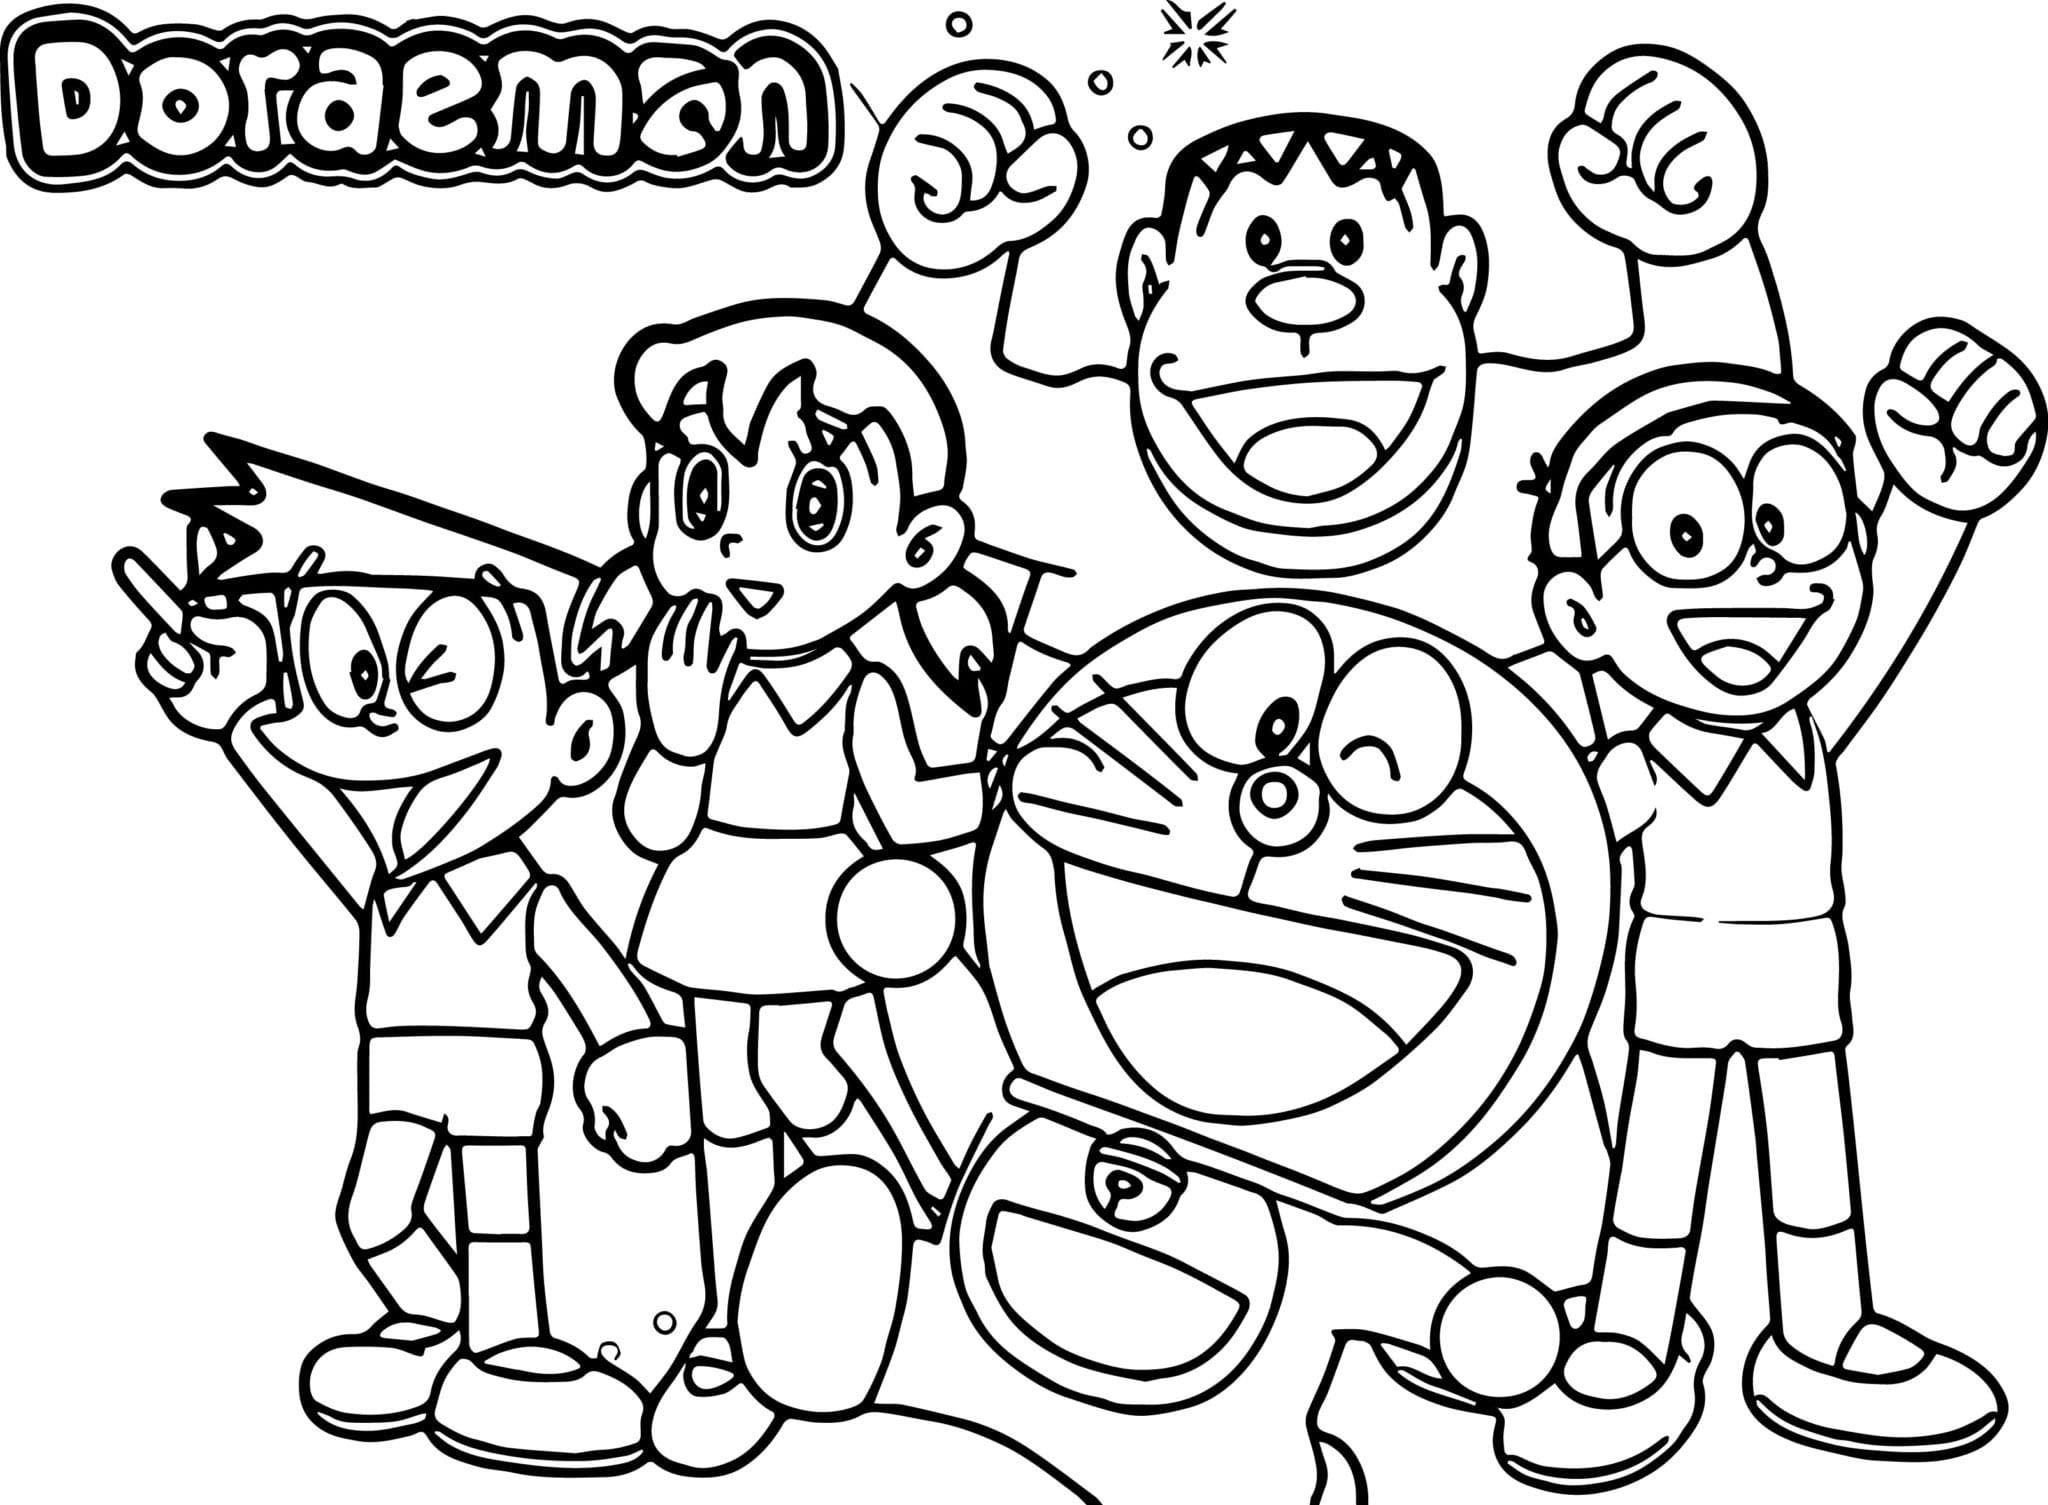 Doraemon-Ausmalbilder-ausmalbilderkinder.de-50